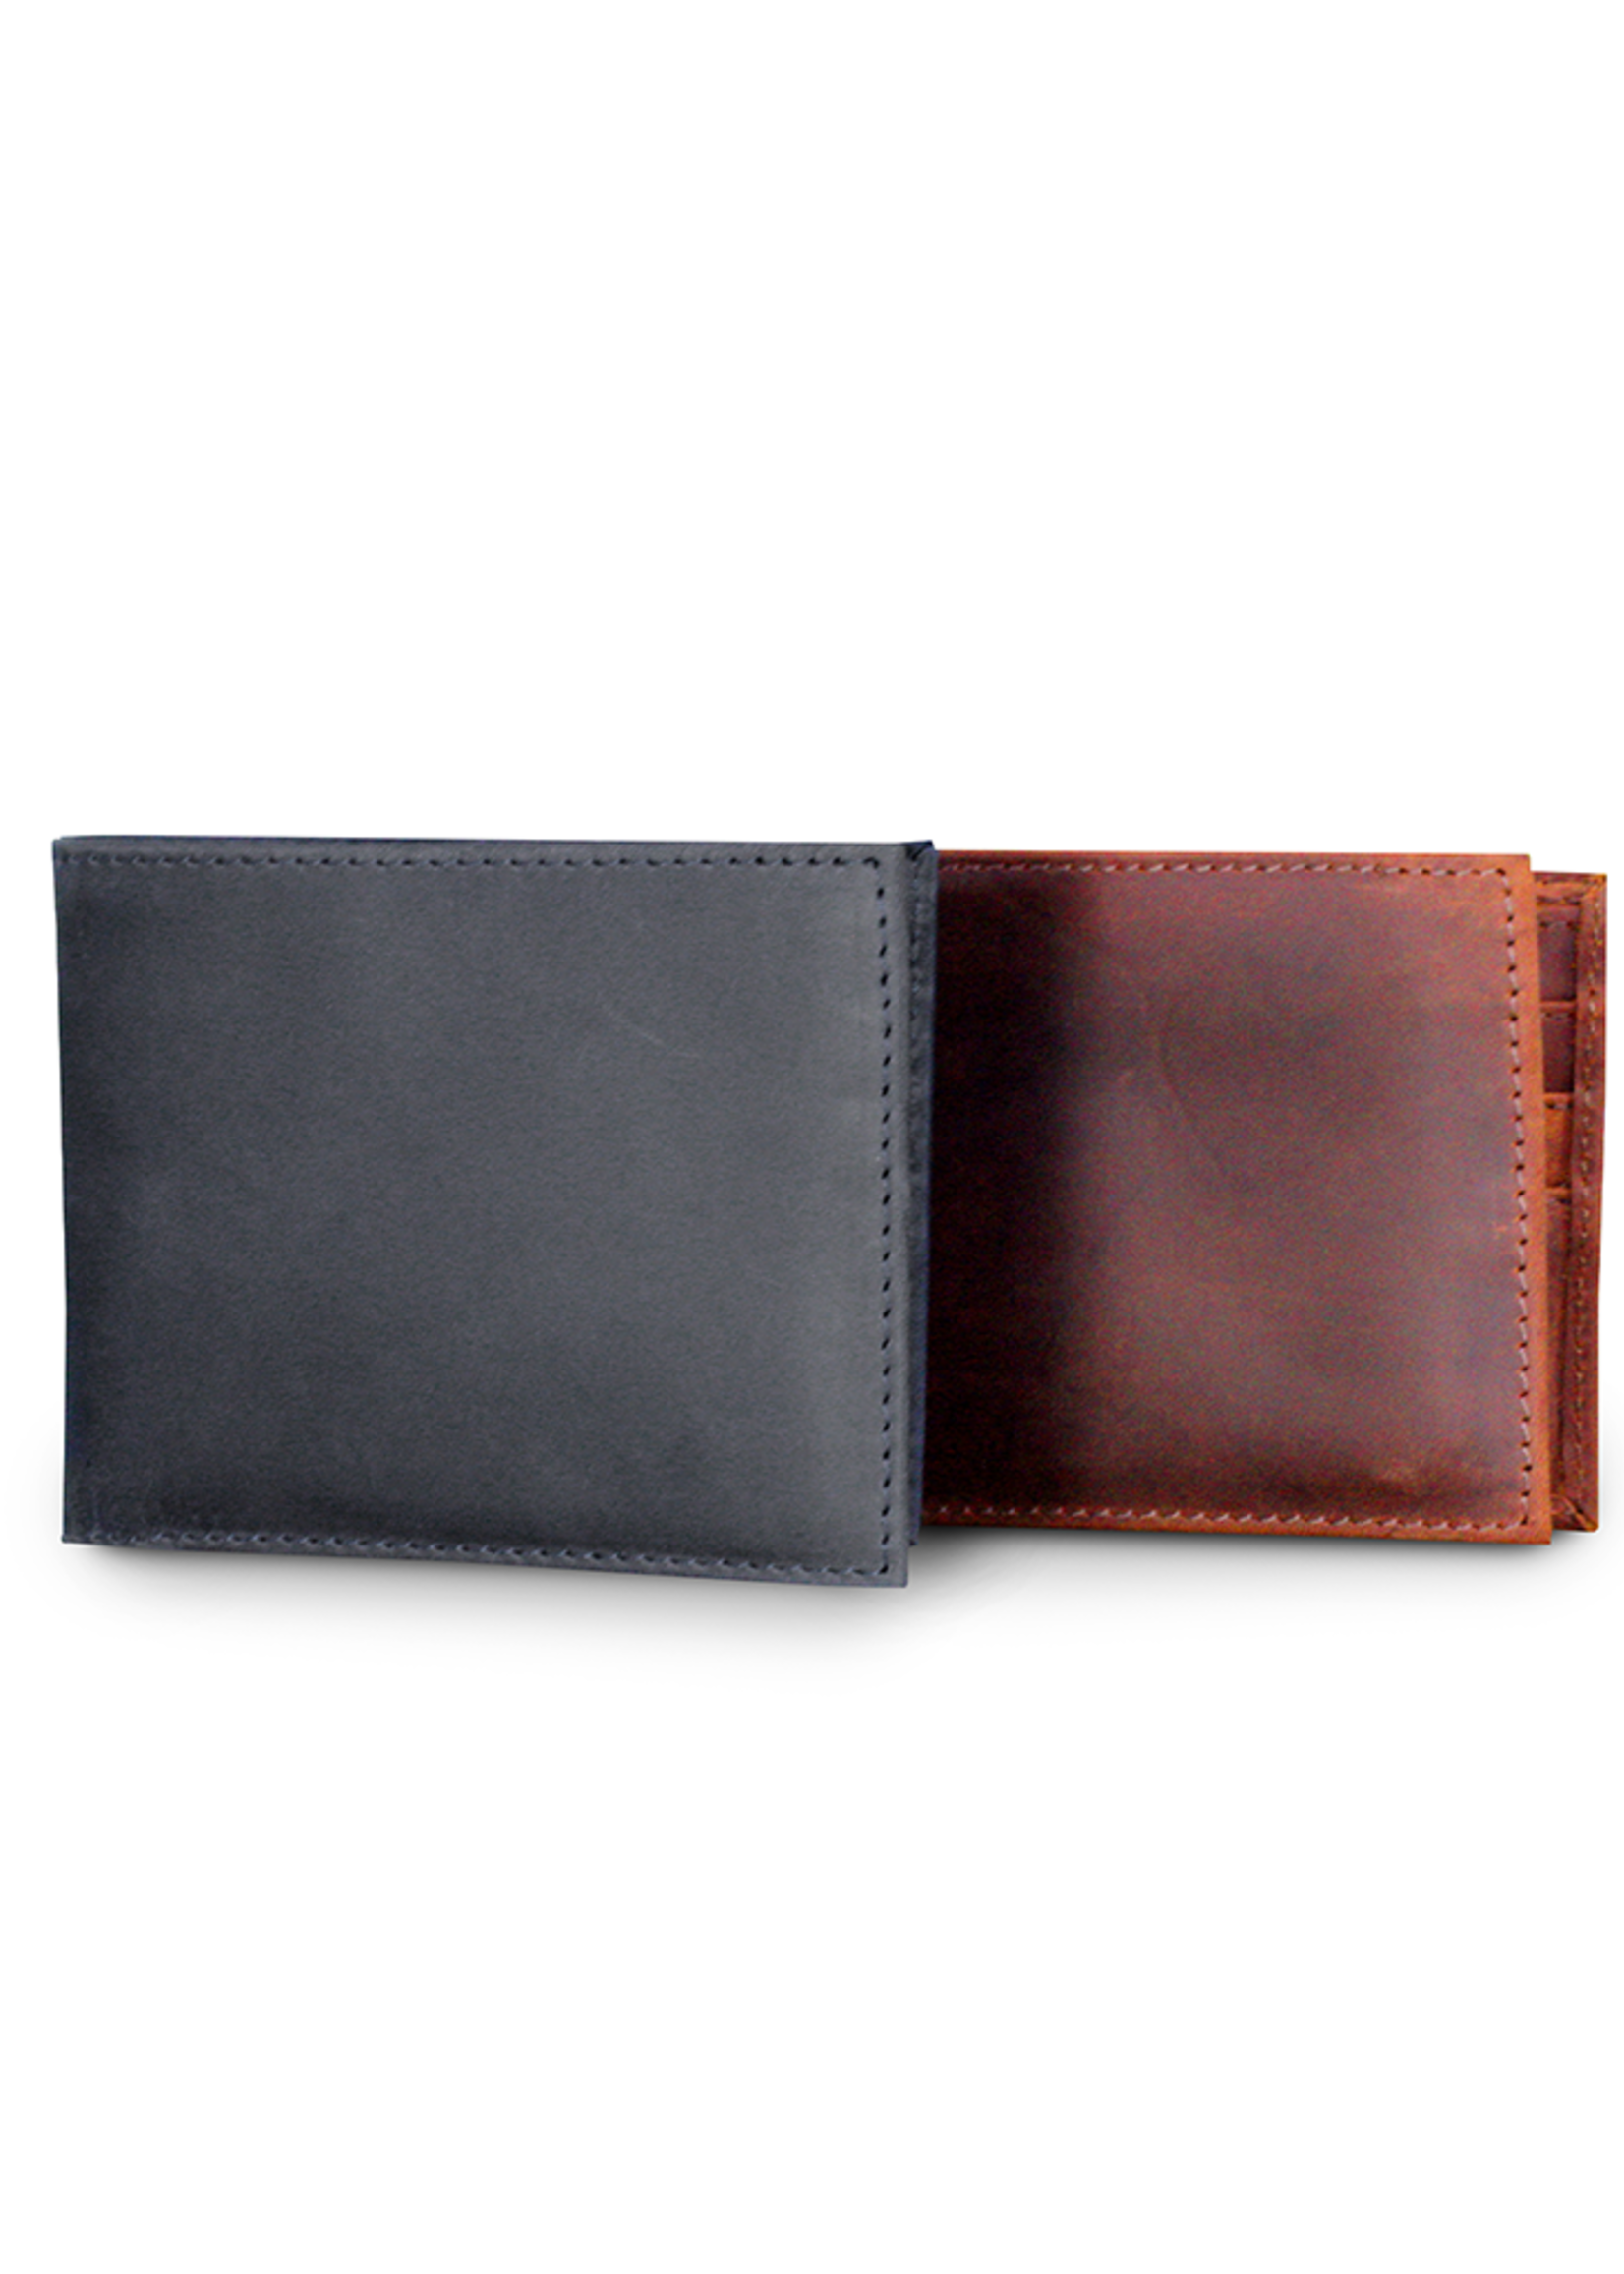 Leather Bi-Fold Wallet - Saddle Brown